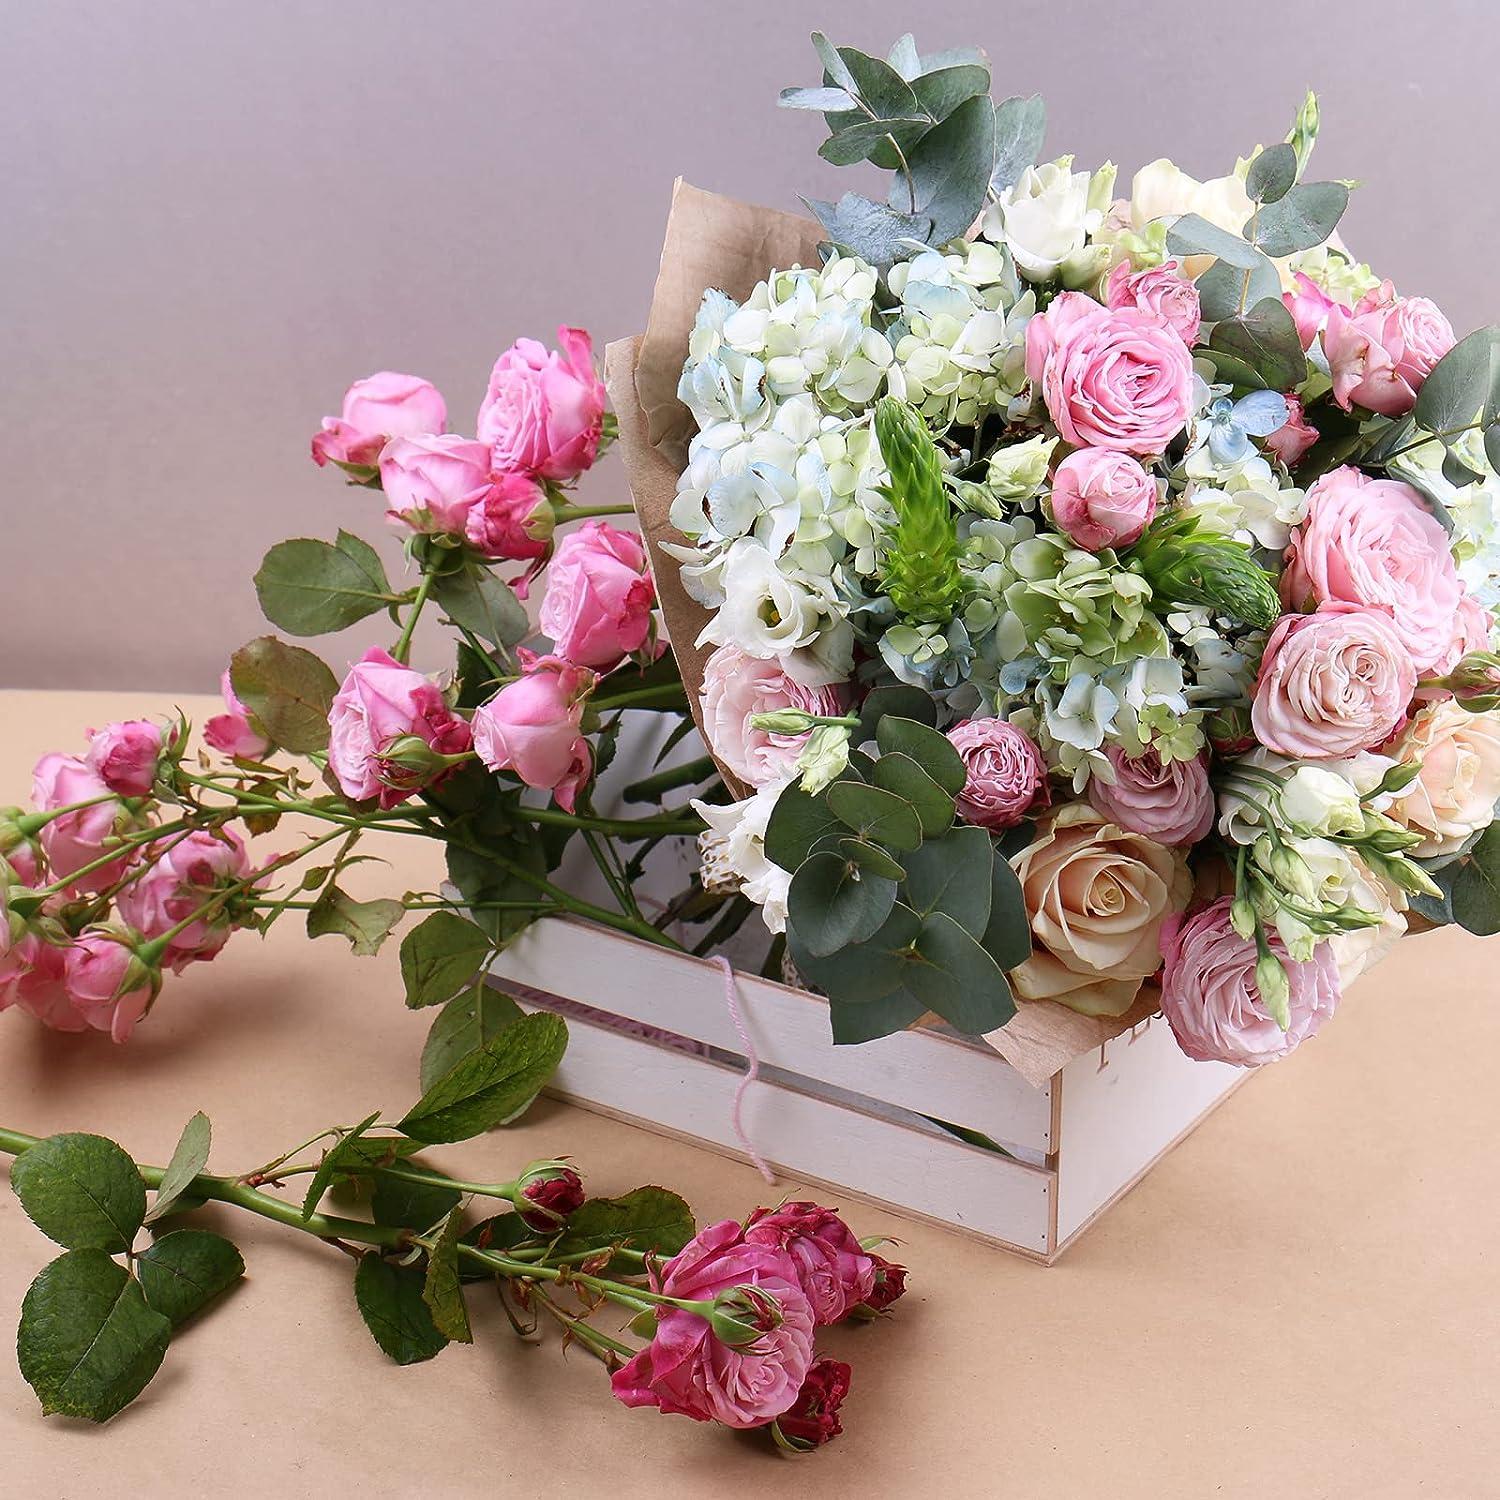 6 Pack Dry Floral Foam Blocks for Flower Arrangements, Styrofoam Block for Artificial  Flowers & Plant Decoration, Great for Crafts, Florists -  Finland